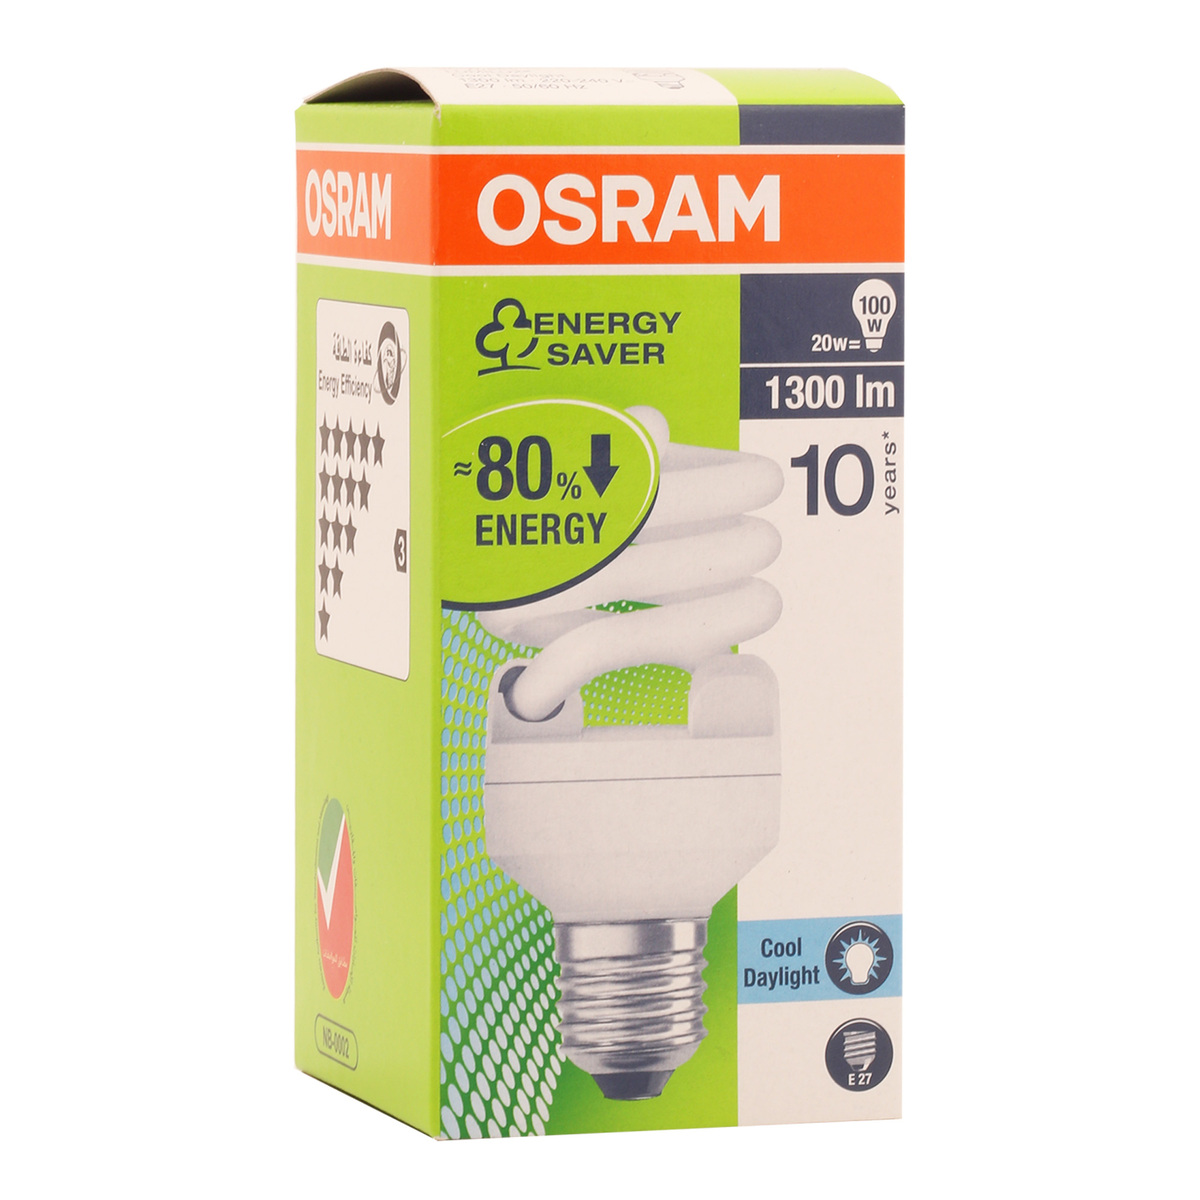 Osram Energy Saver 20W E27 Mini Twist Day Light